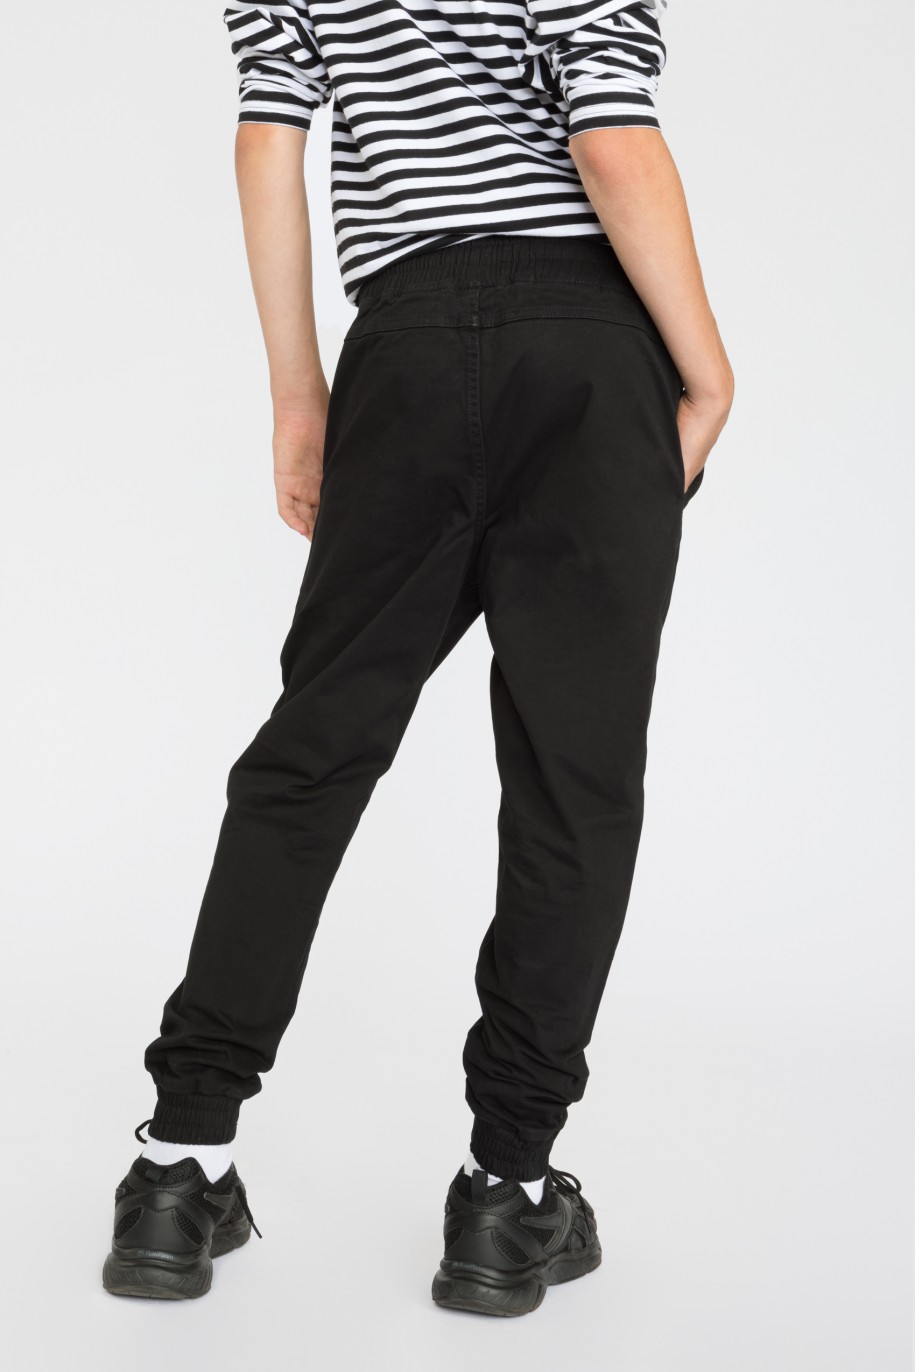 Czarne jeansy typu jogger - 36500